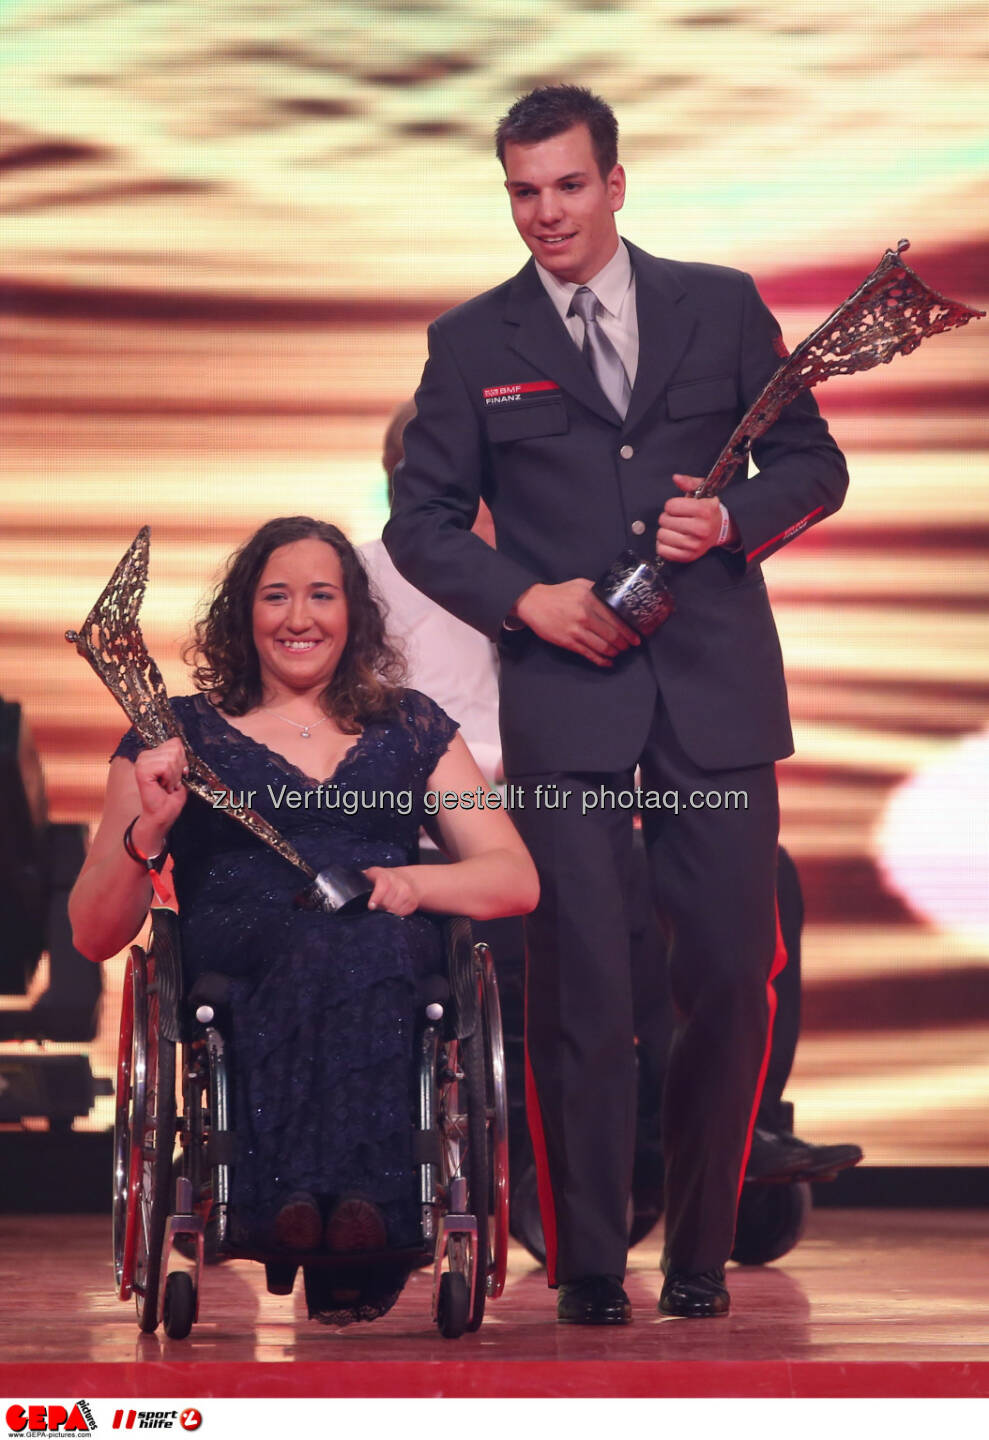 Claudia Loesch and Markus Salcher, Behindertensportler des Jahres, Lotterien Gala Nacht des Sports, Photo: Gepa pictures/ Christian Walgram